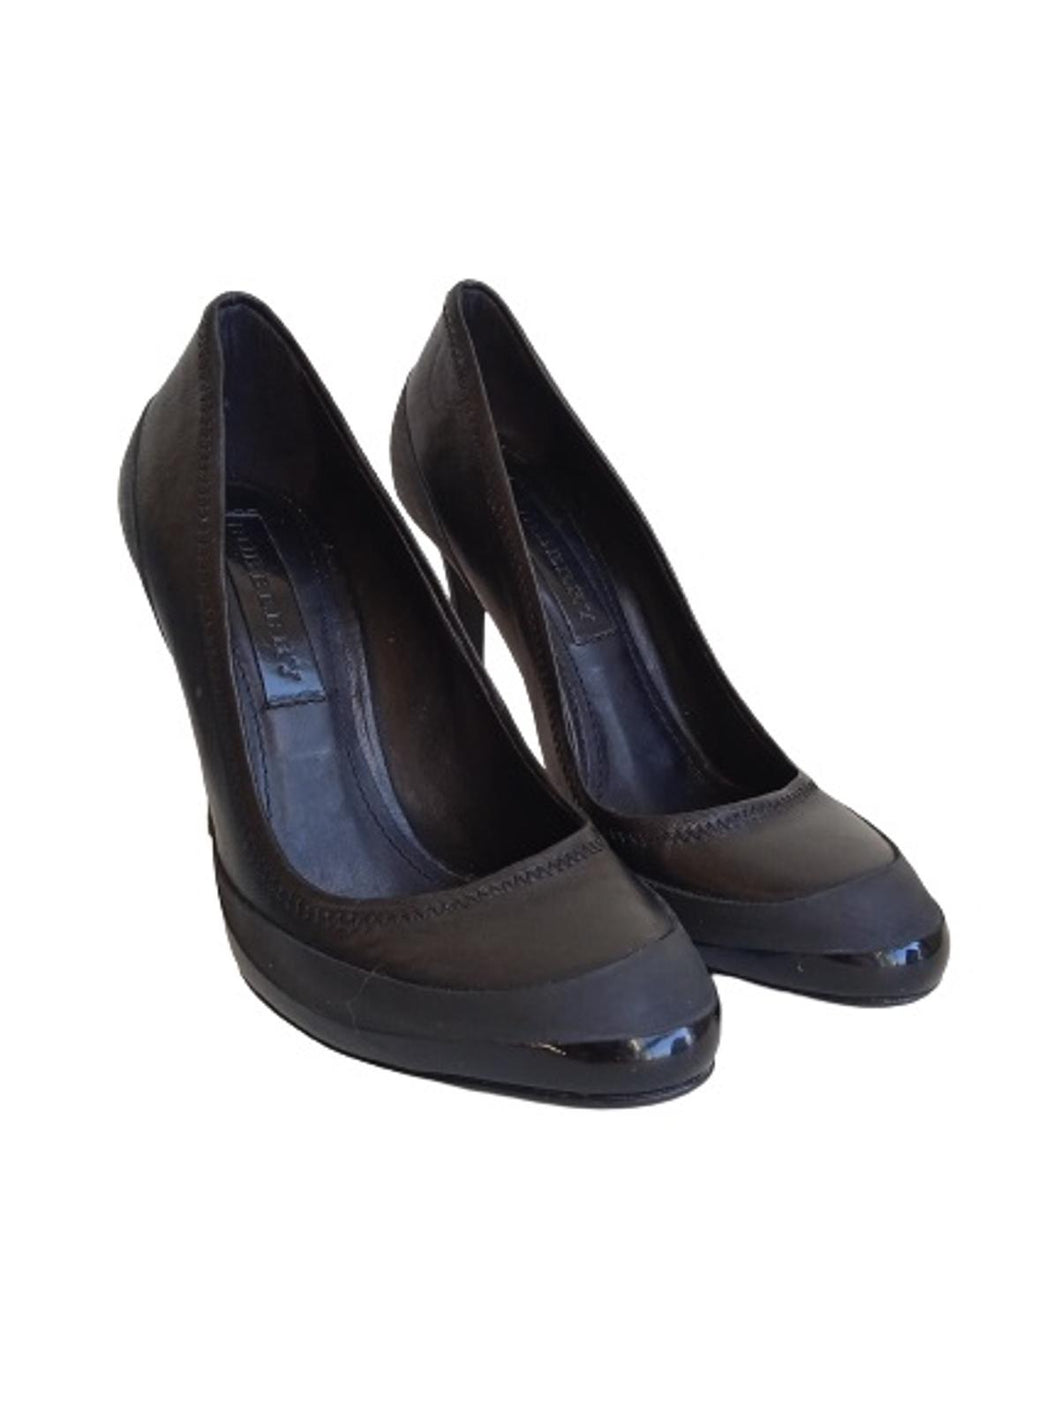 BURBERRY Ladies Black Leather Round Toe Stiletto Pump Shoes Size EU35 UK2